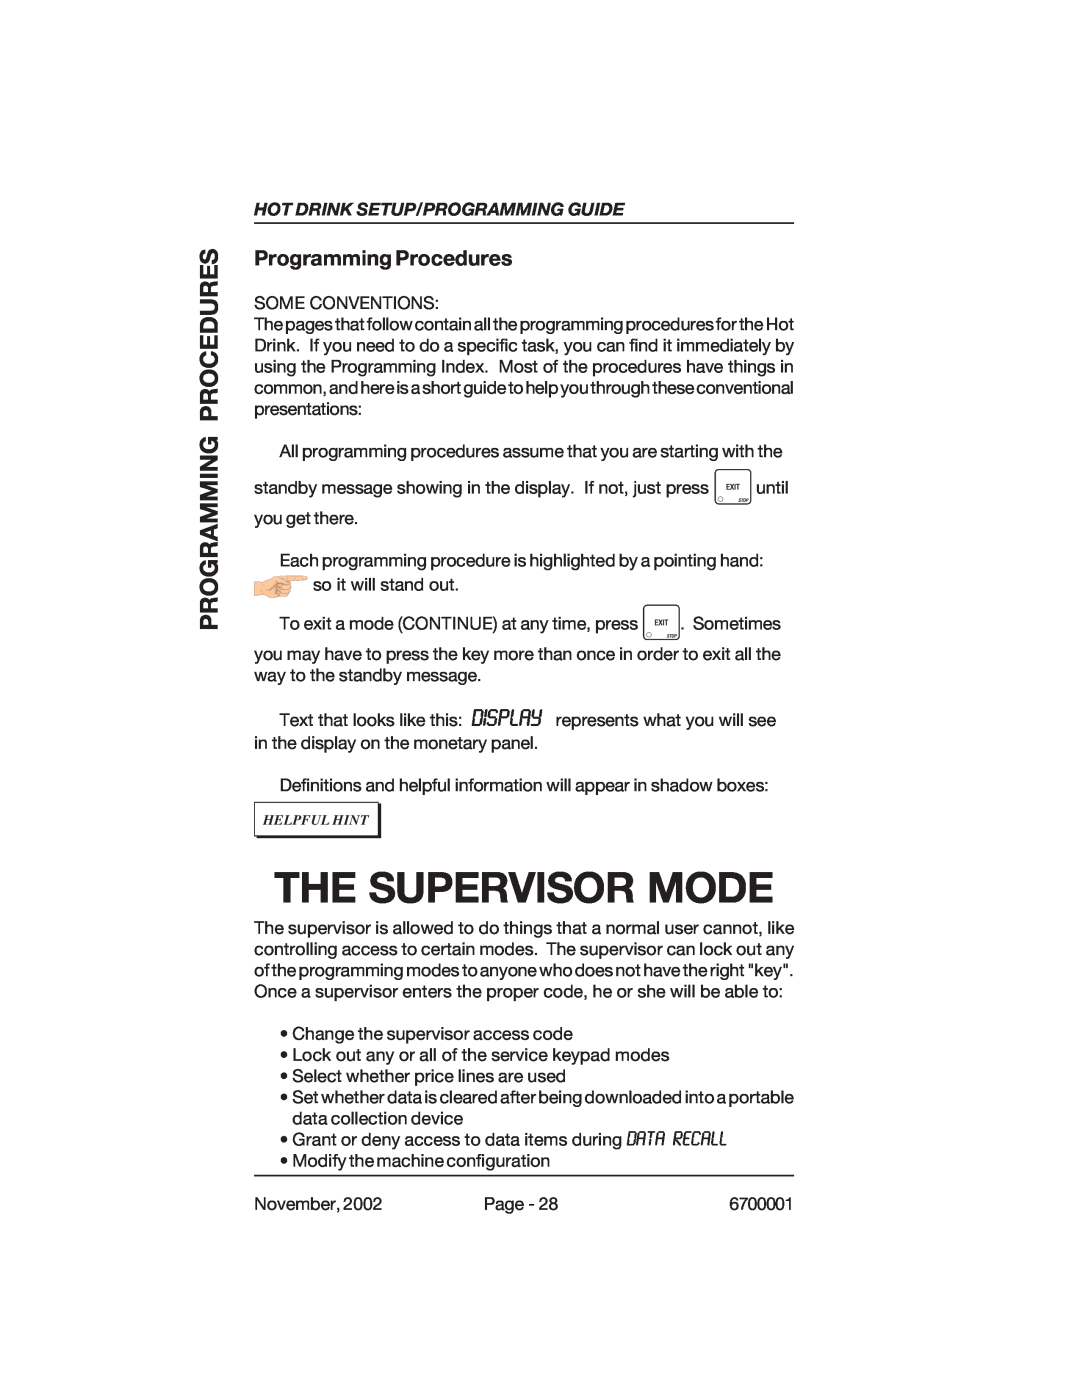 Crane Merchandising Systems 670, 678 manual The Supervisor Mode, Programming Procedures, Hot Drink Setup/Programming Guide 